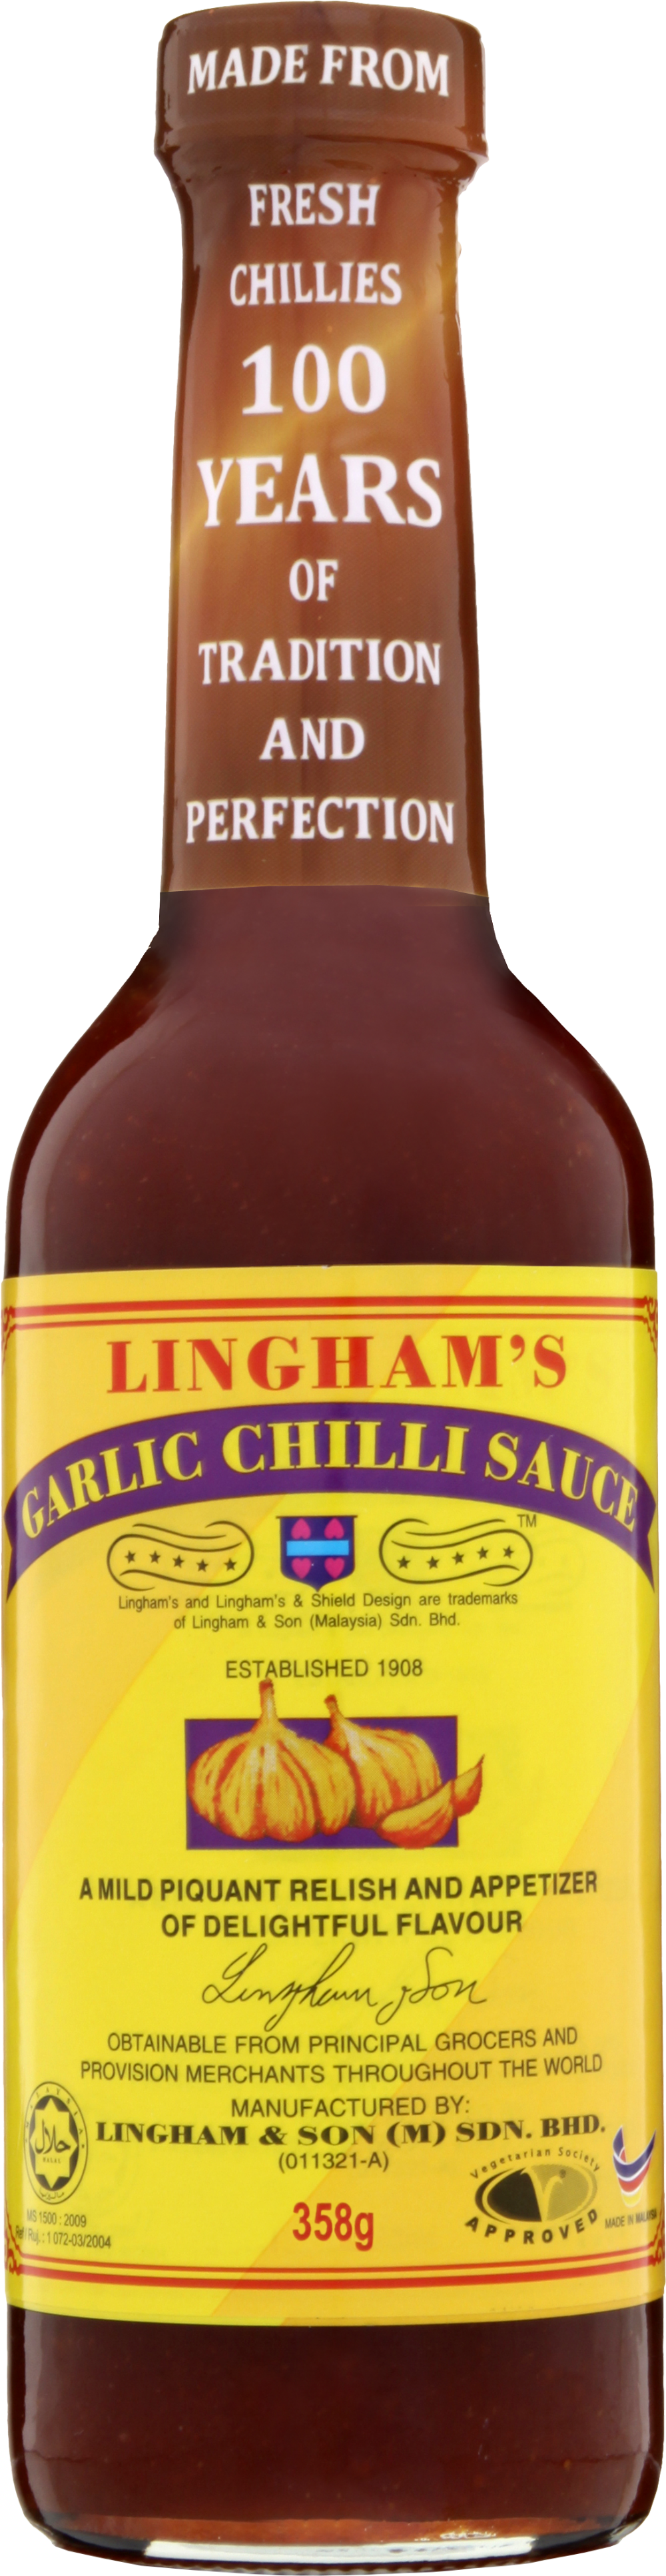 LINGHAMS Garlic Chilli Sauce 358g